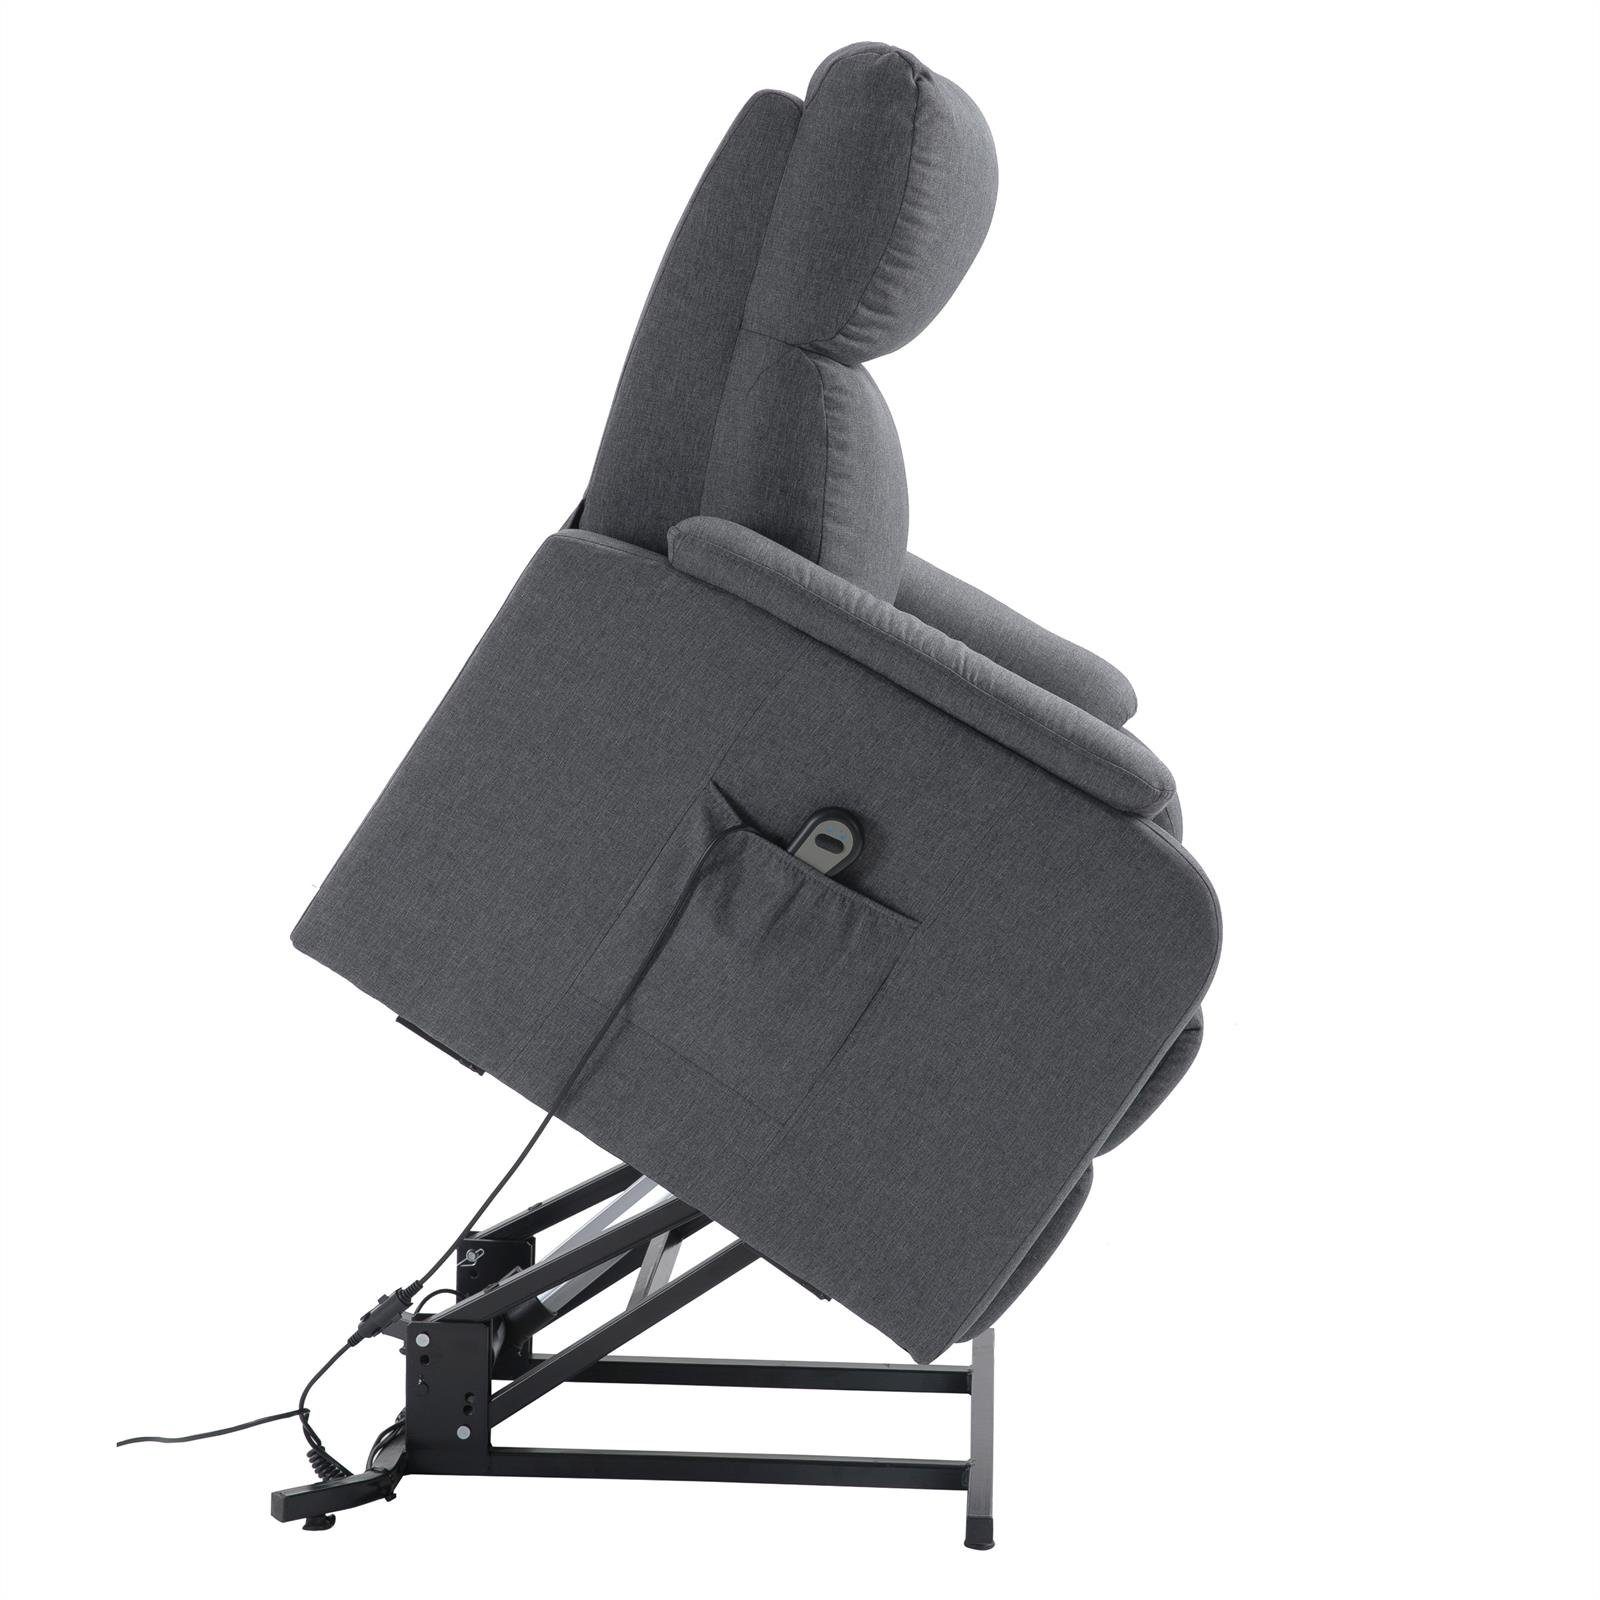 Ruhe Sessel grau CARO-Möbel TV Fernsehsessel mit elektrisc RETIRE, TV-Sessel Relaxsessel Aufstehfunktion